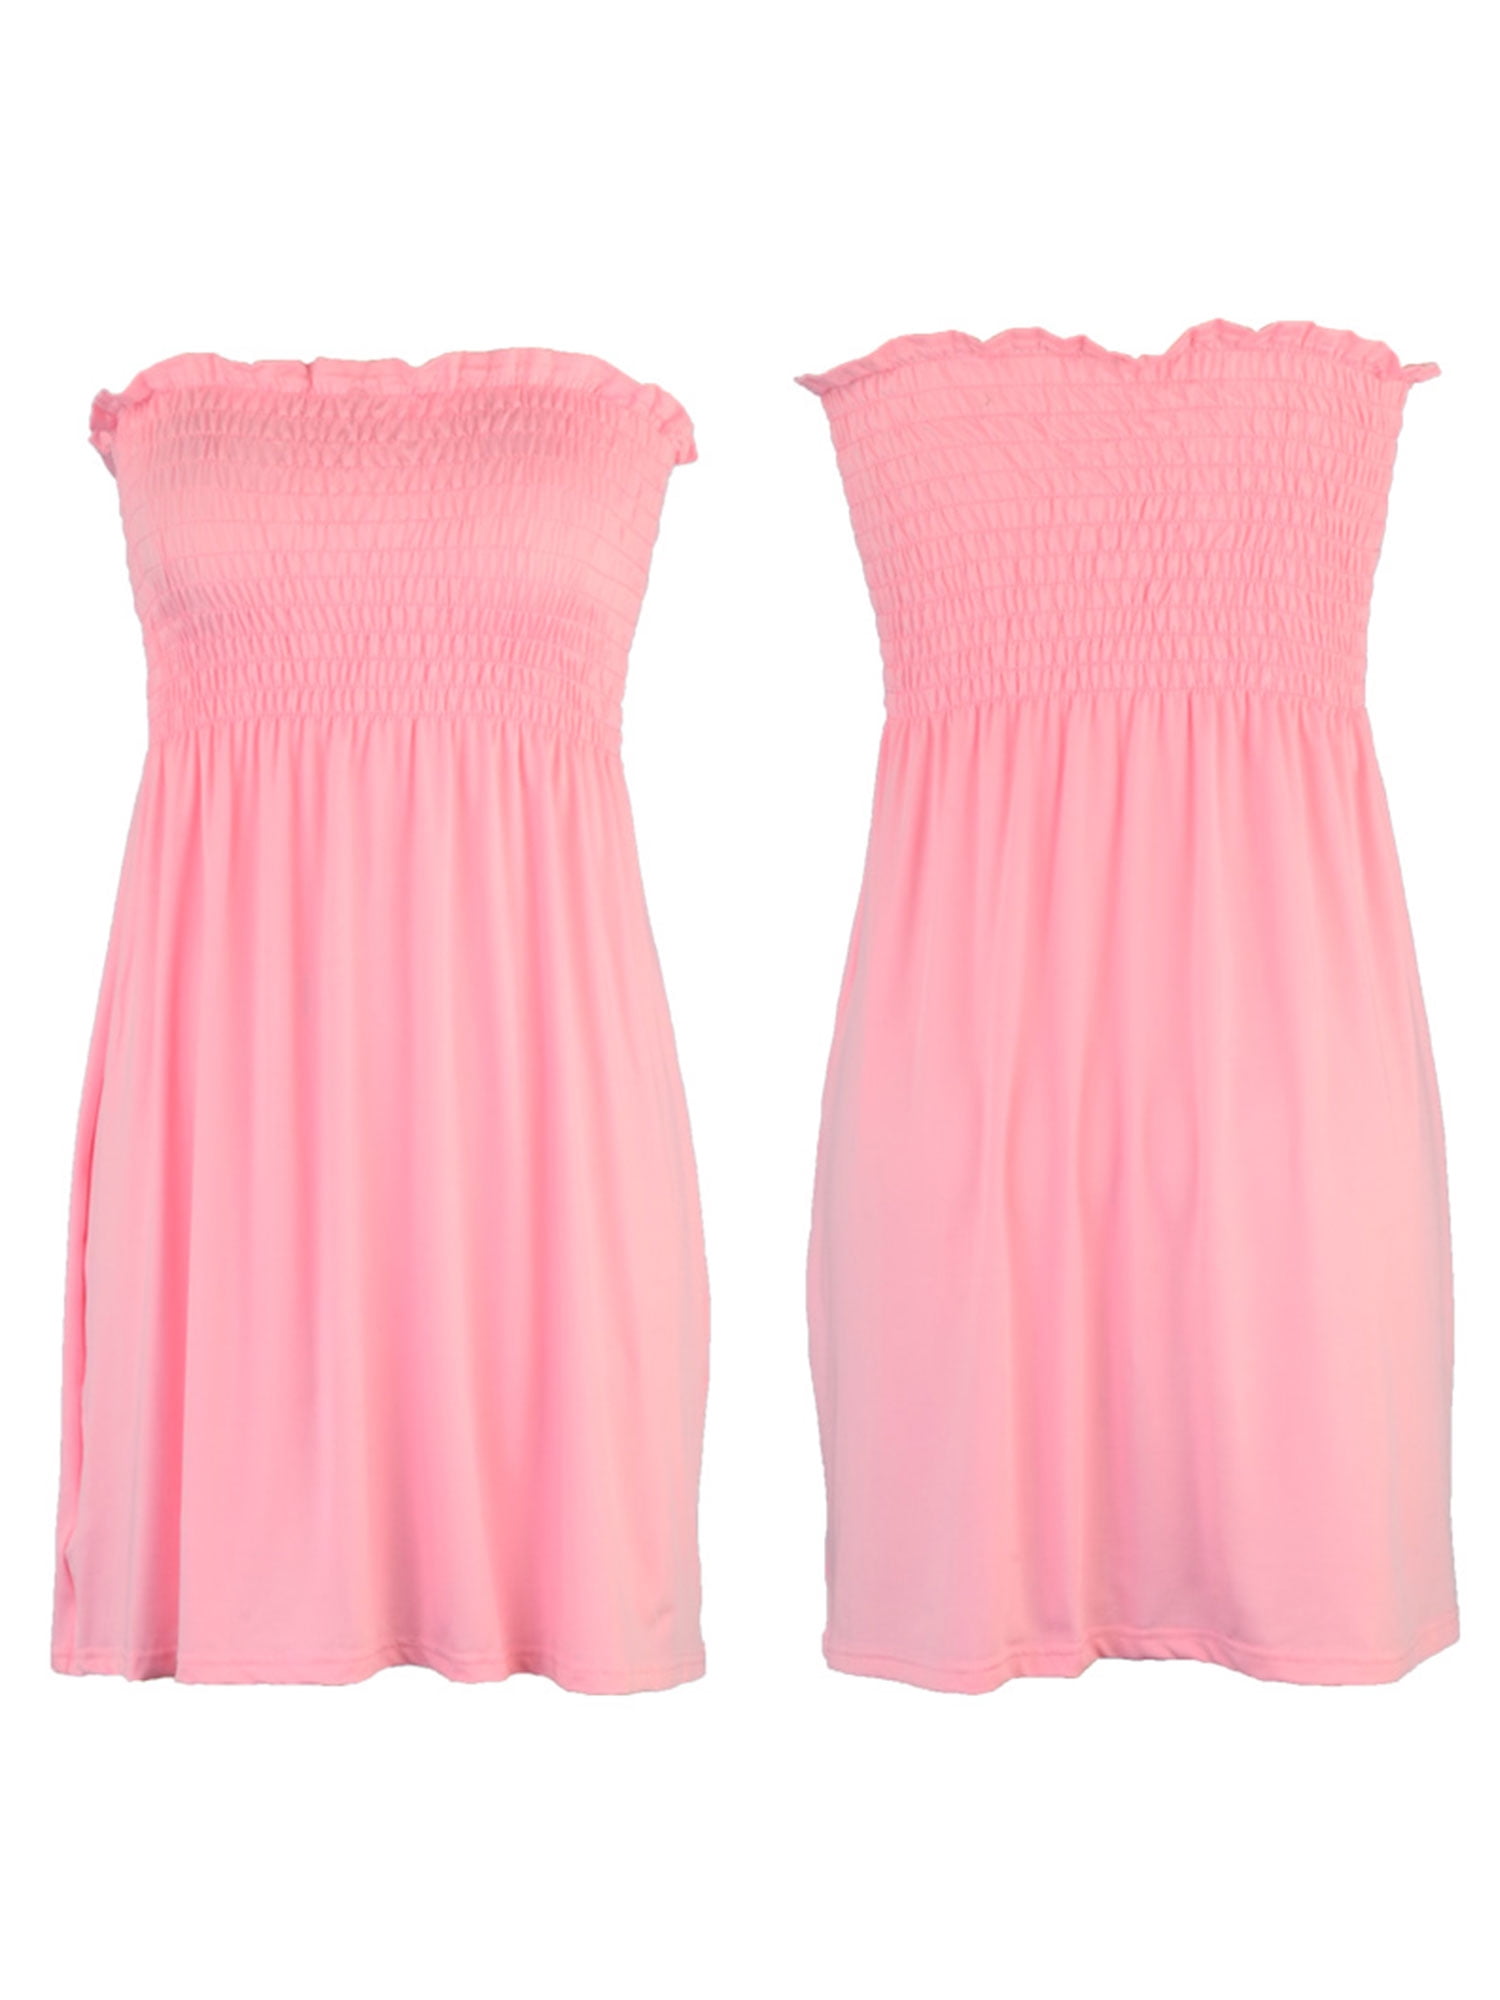 pink dress tops